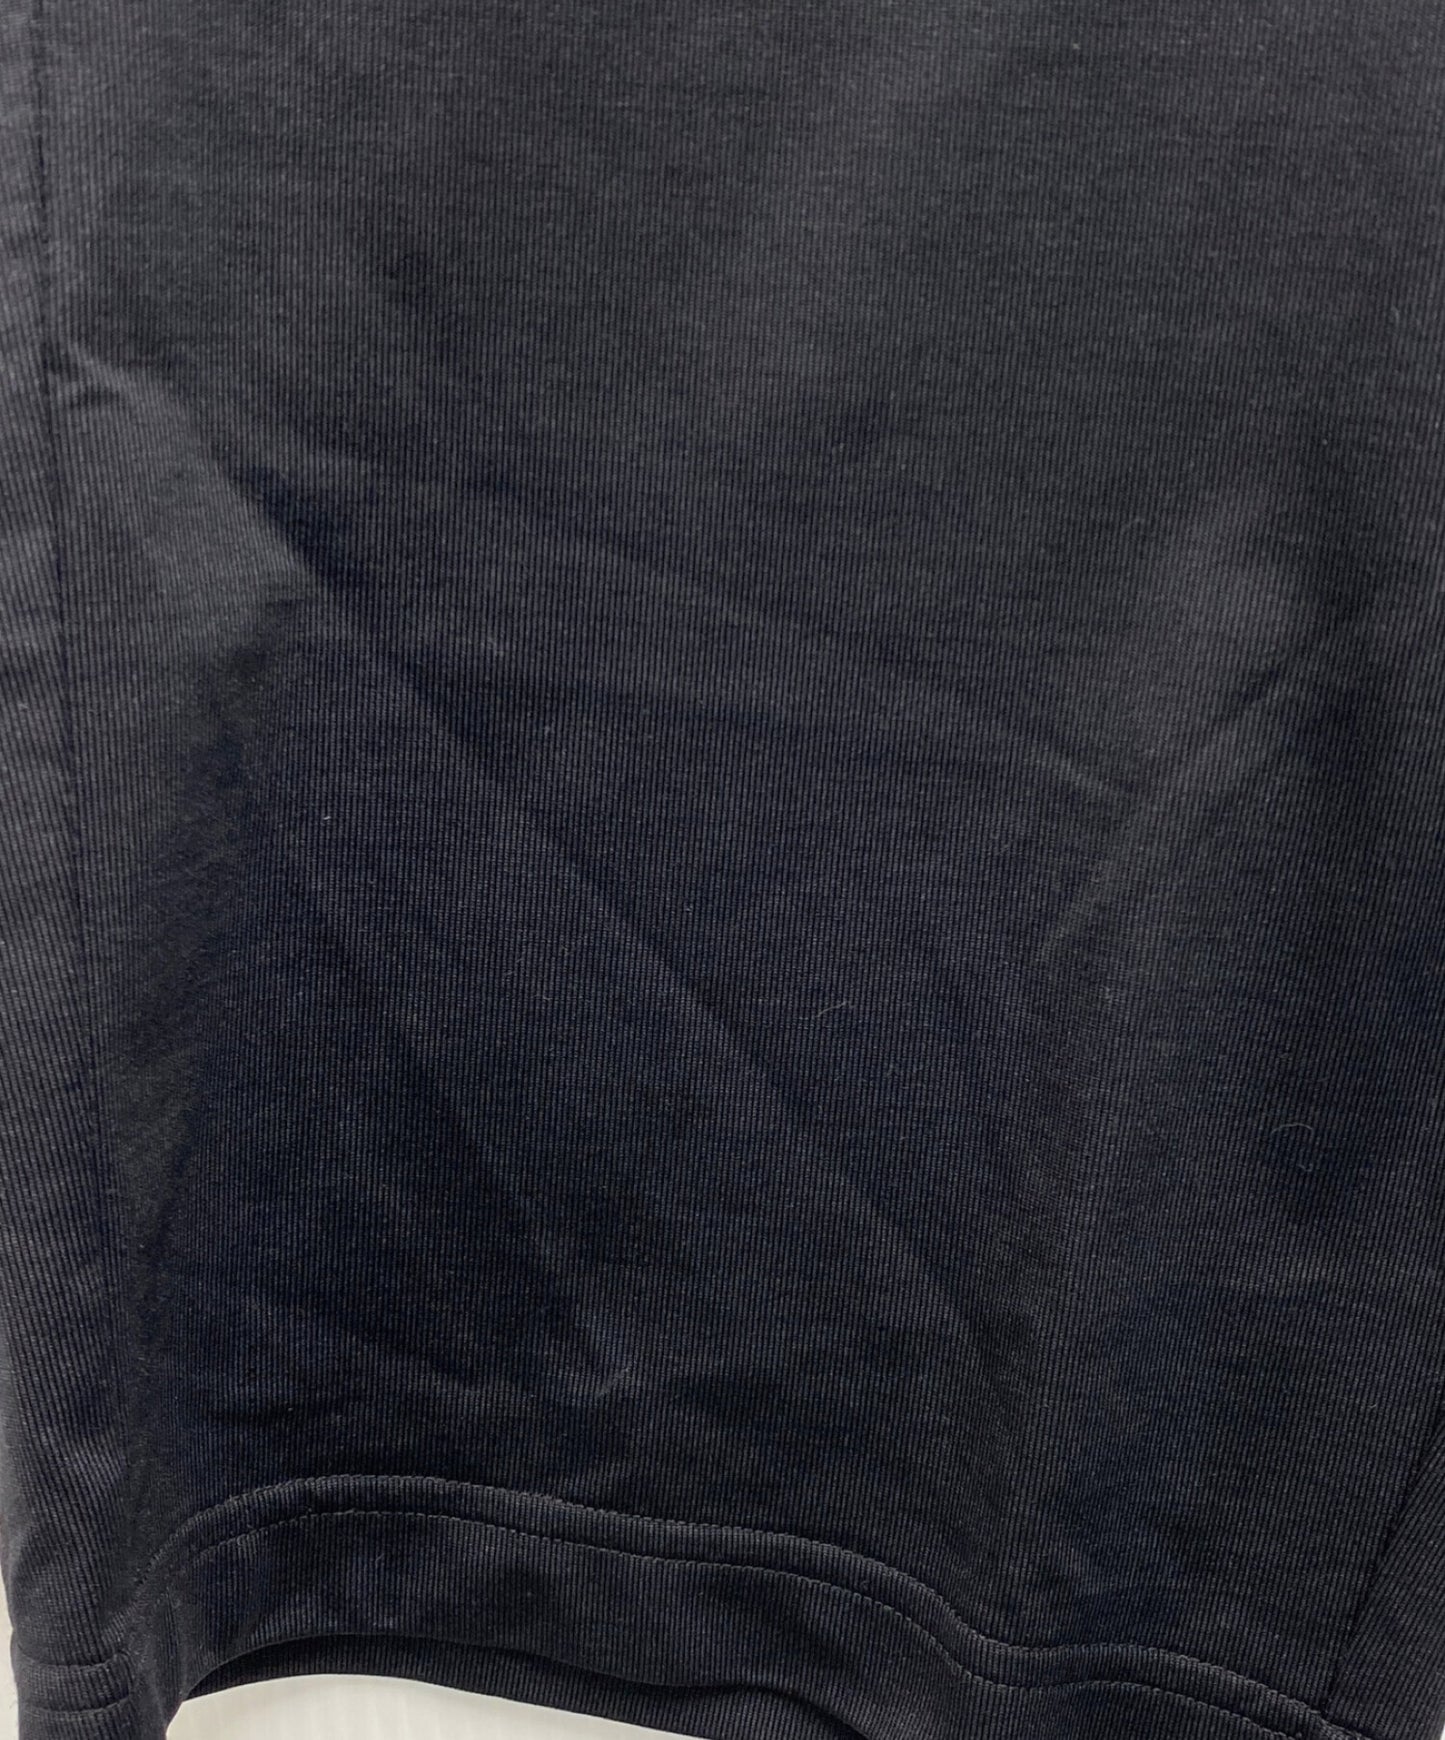 Yohji Yamamoto Pour Homme Nylon Jersey Shorts He-T10-631